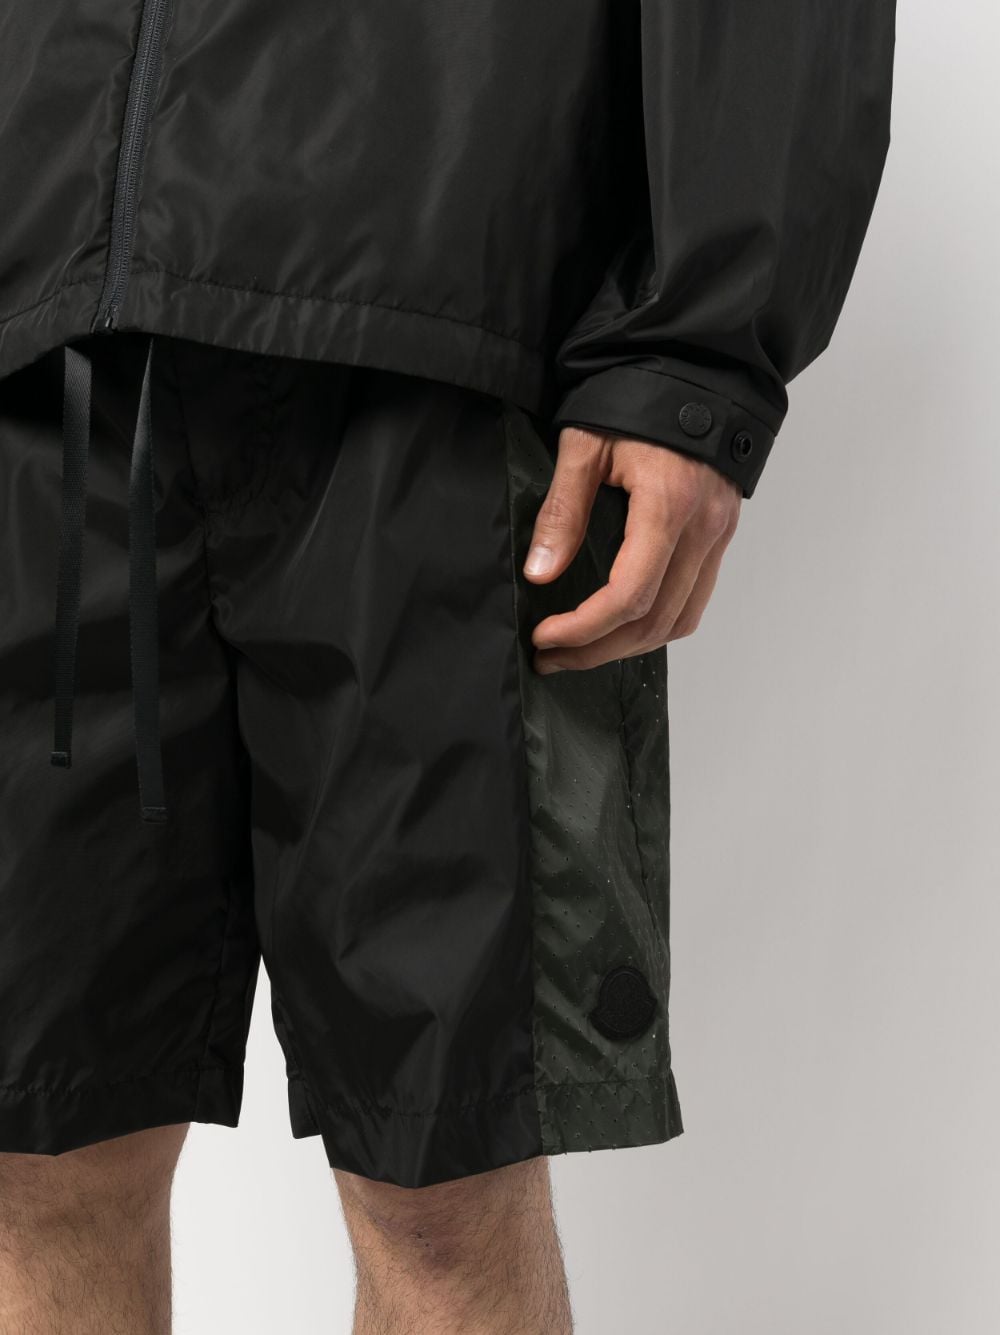 Colour-block bermuda shorts